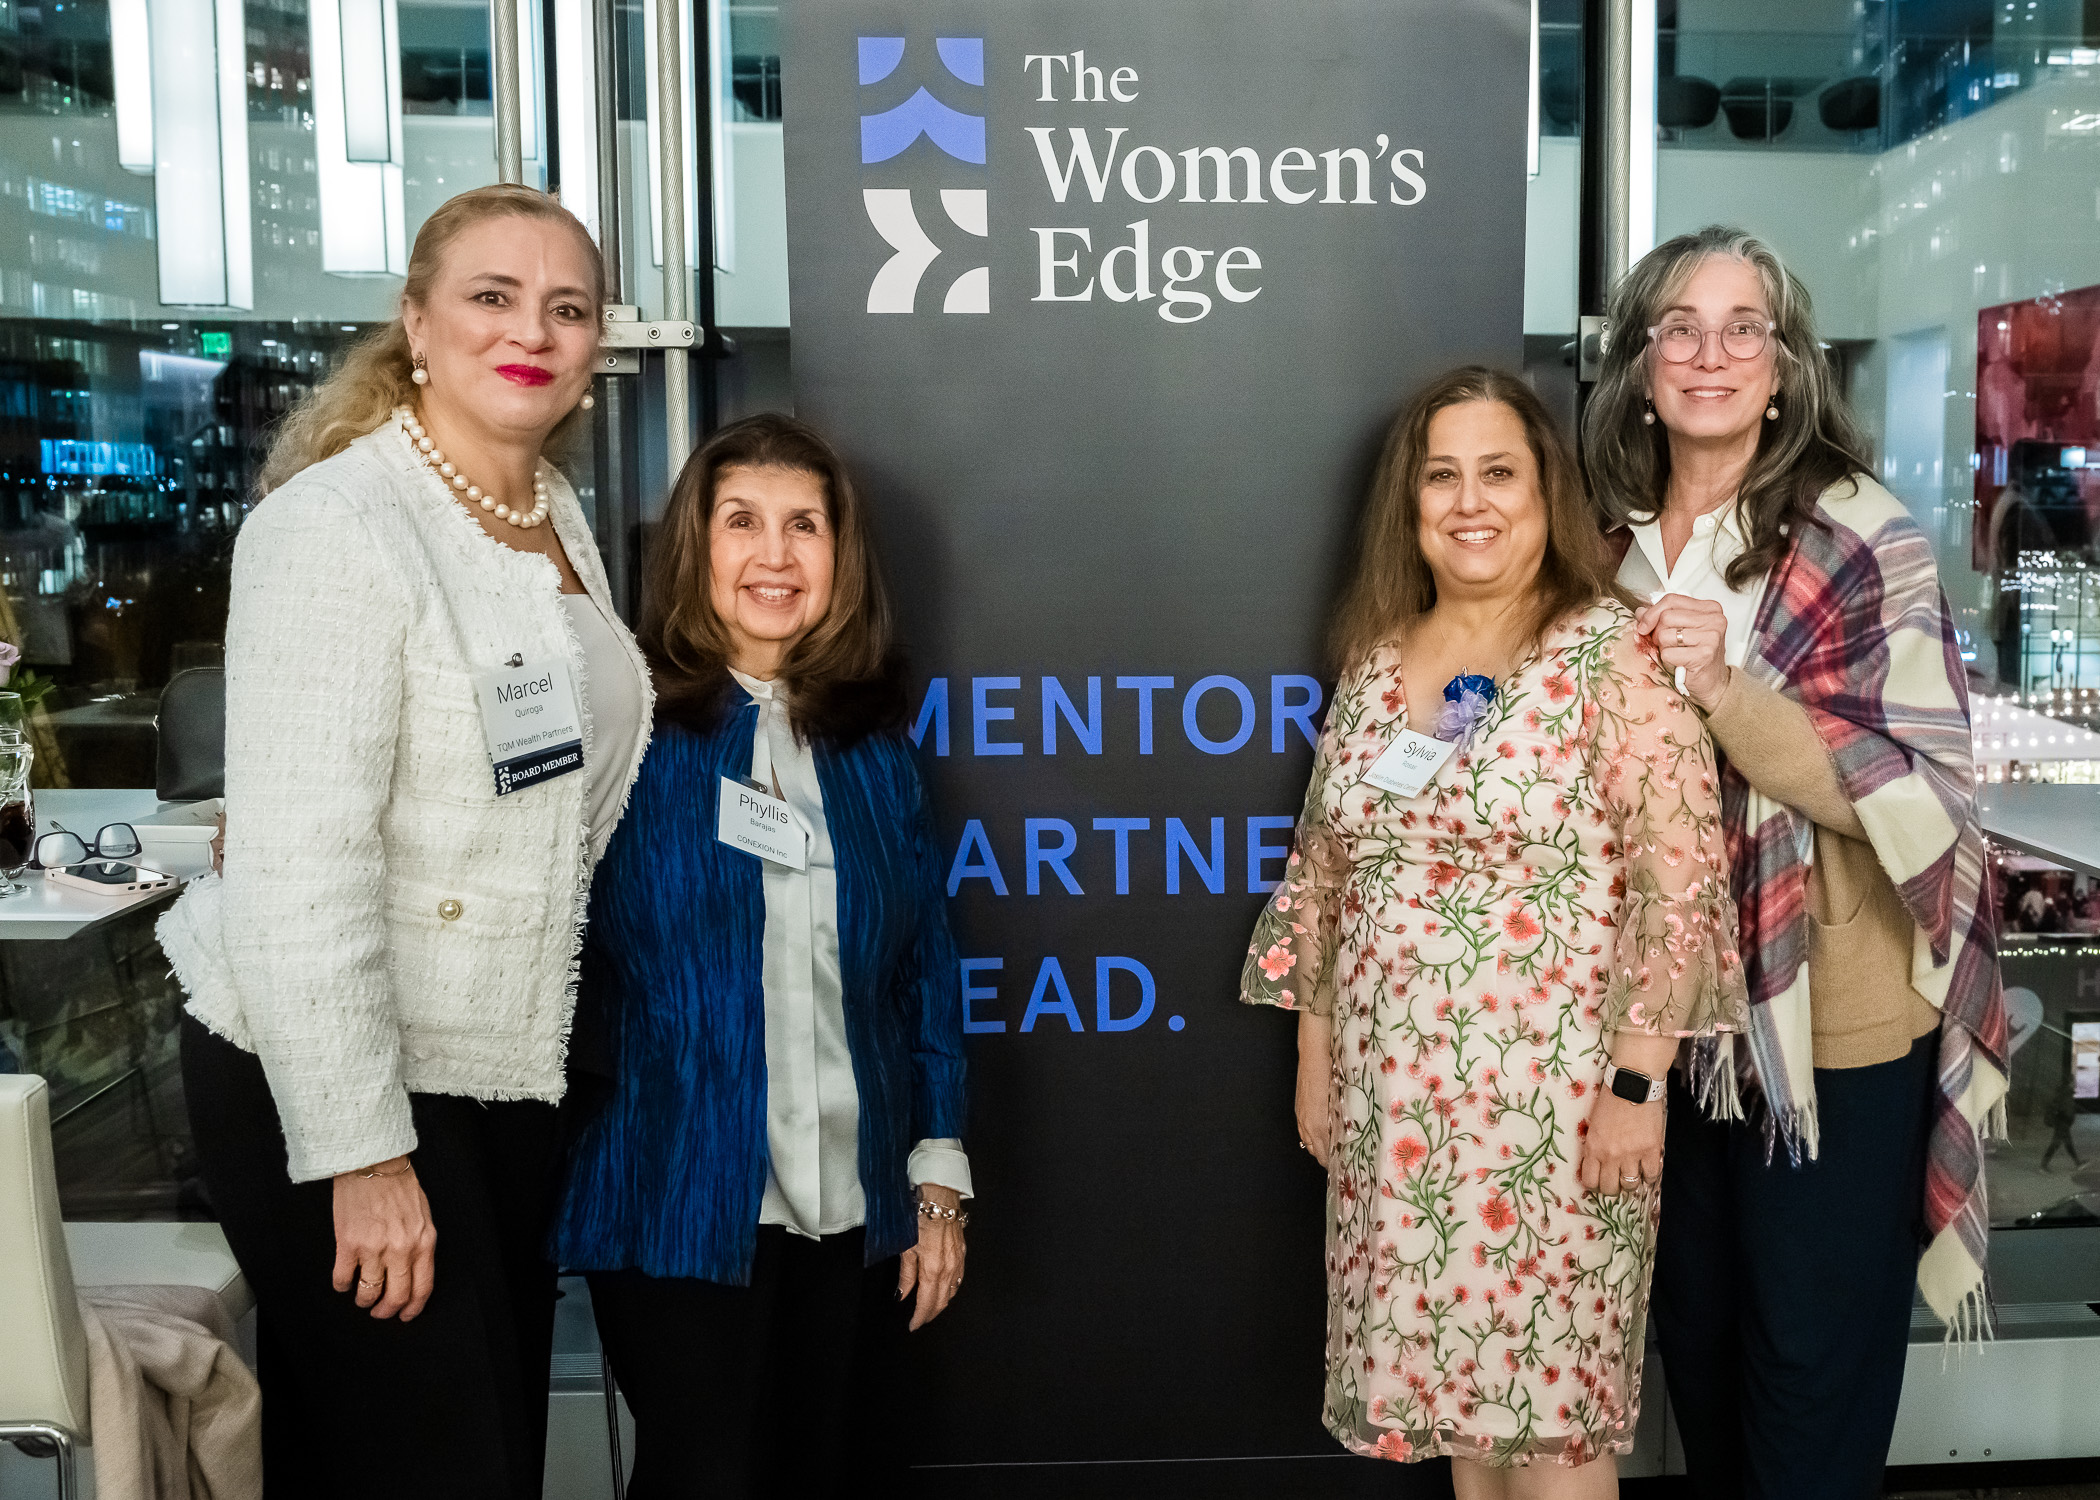 Extraordinary Women Advancing Healthcare - The Women's Edge